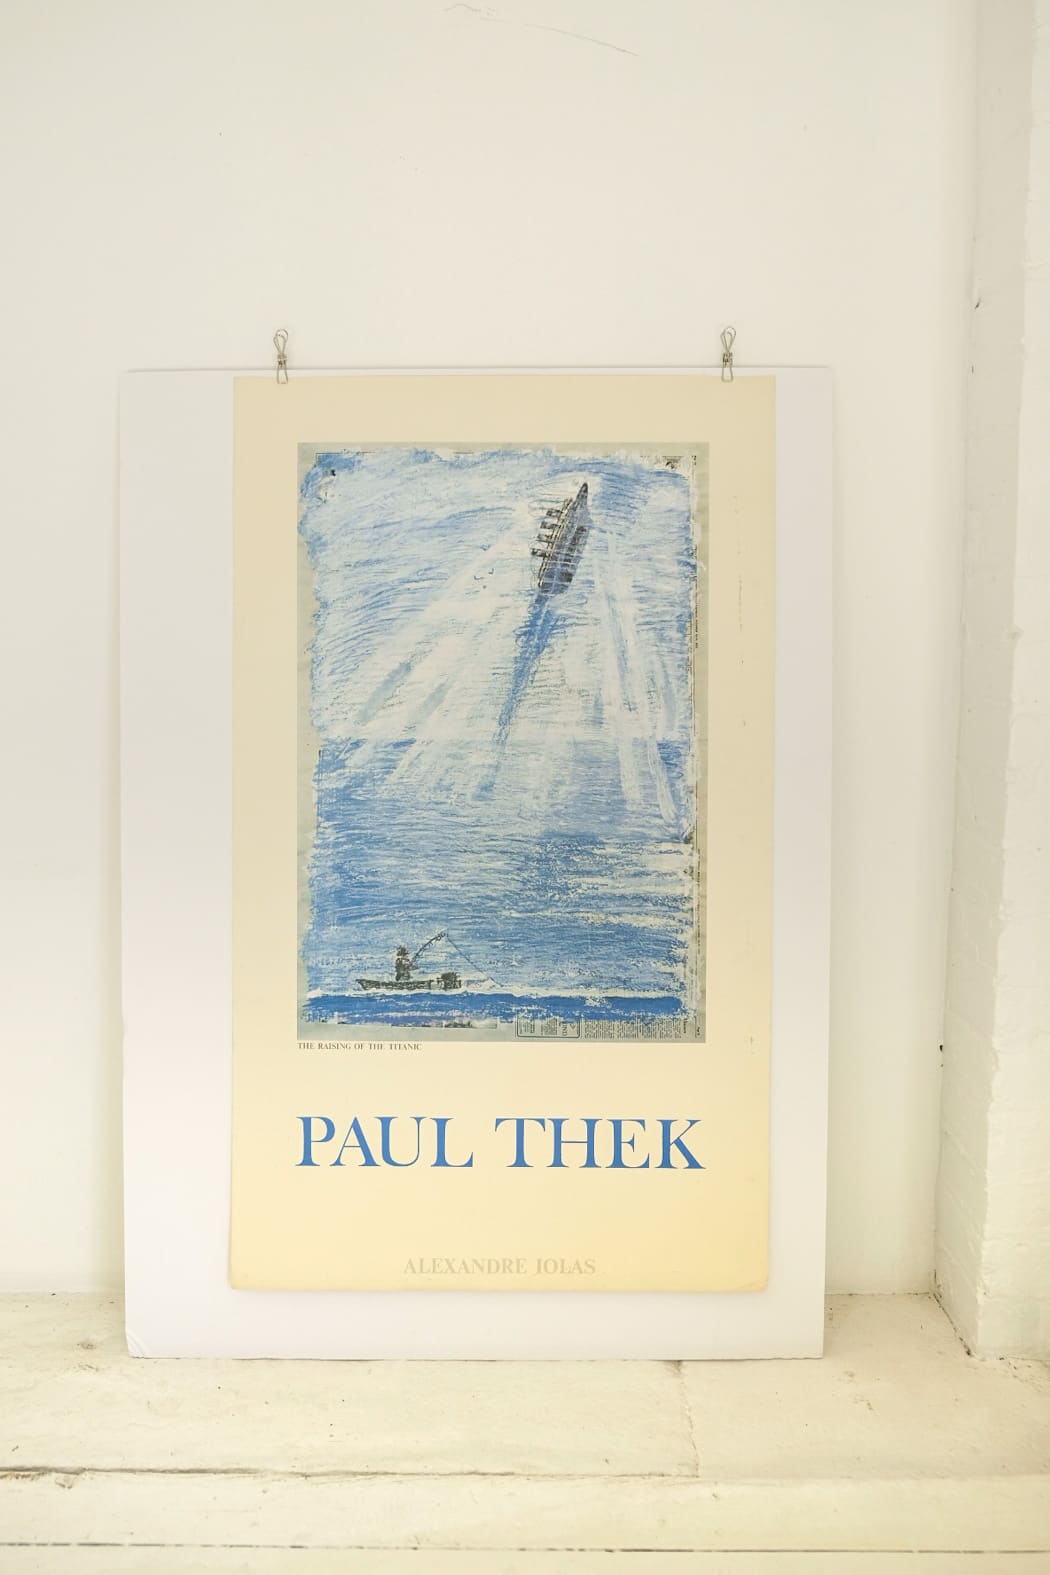 Paul Thek The Raising of the Titanic